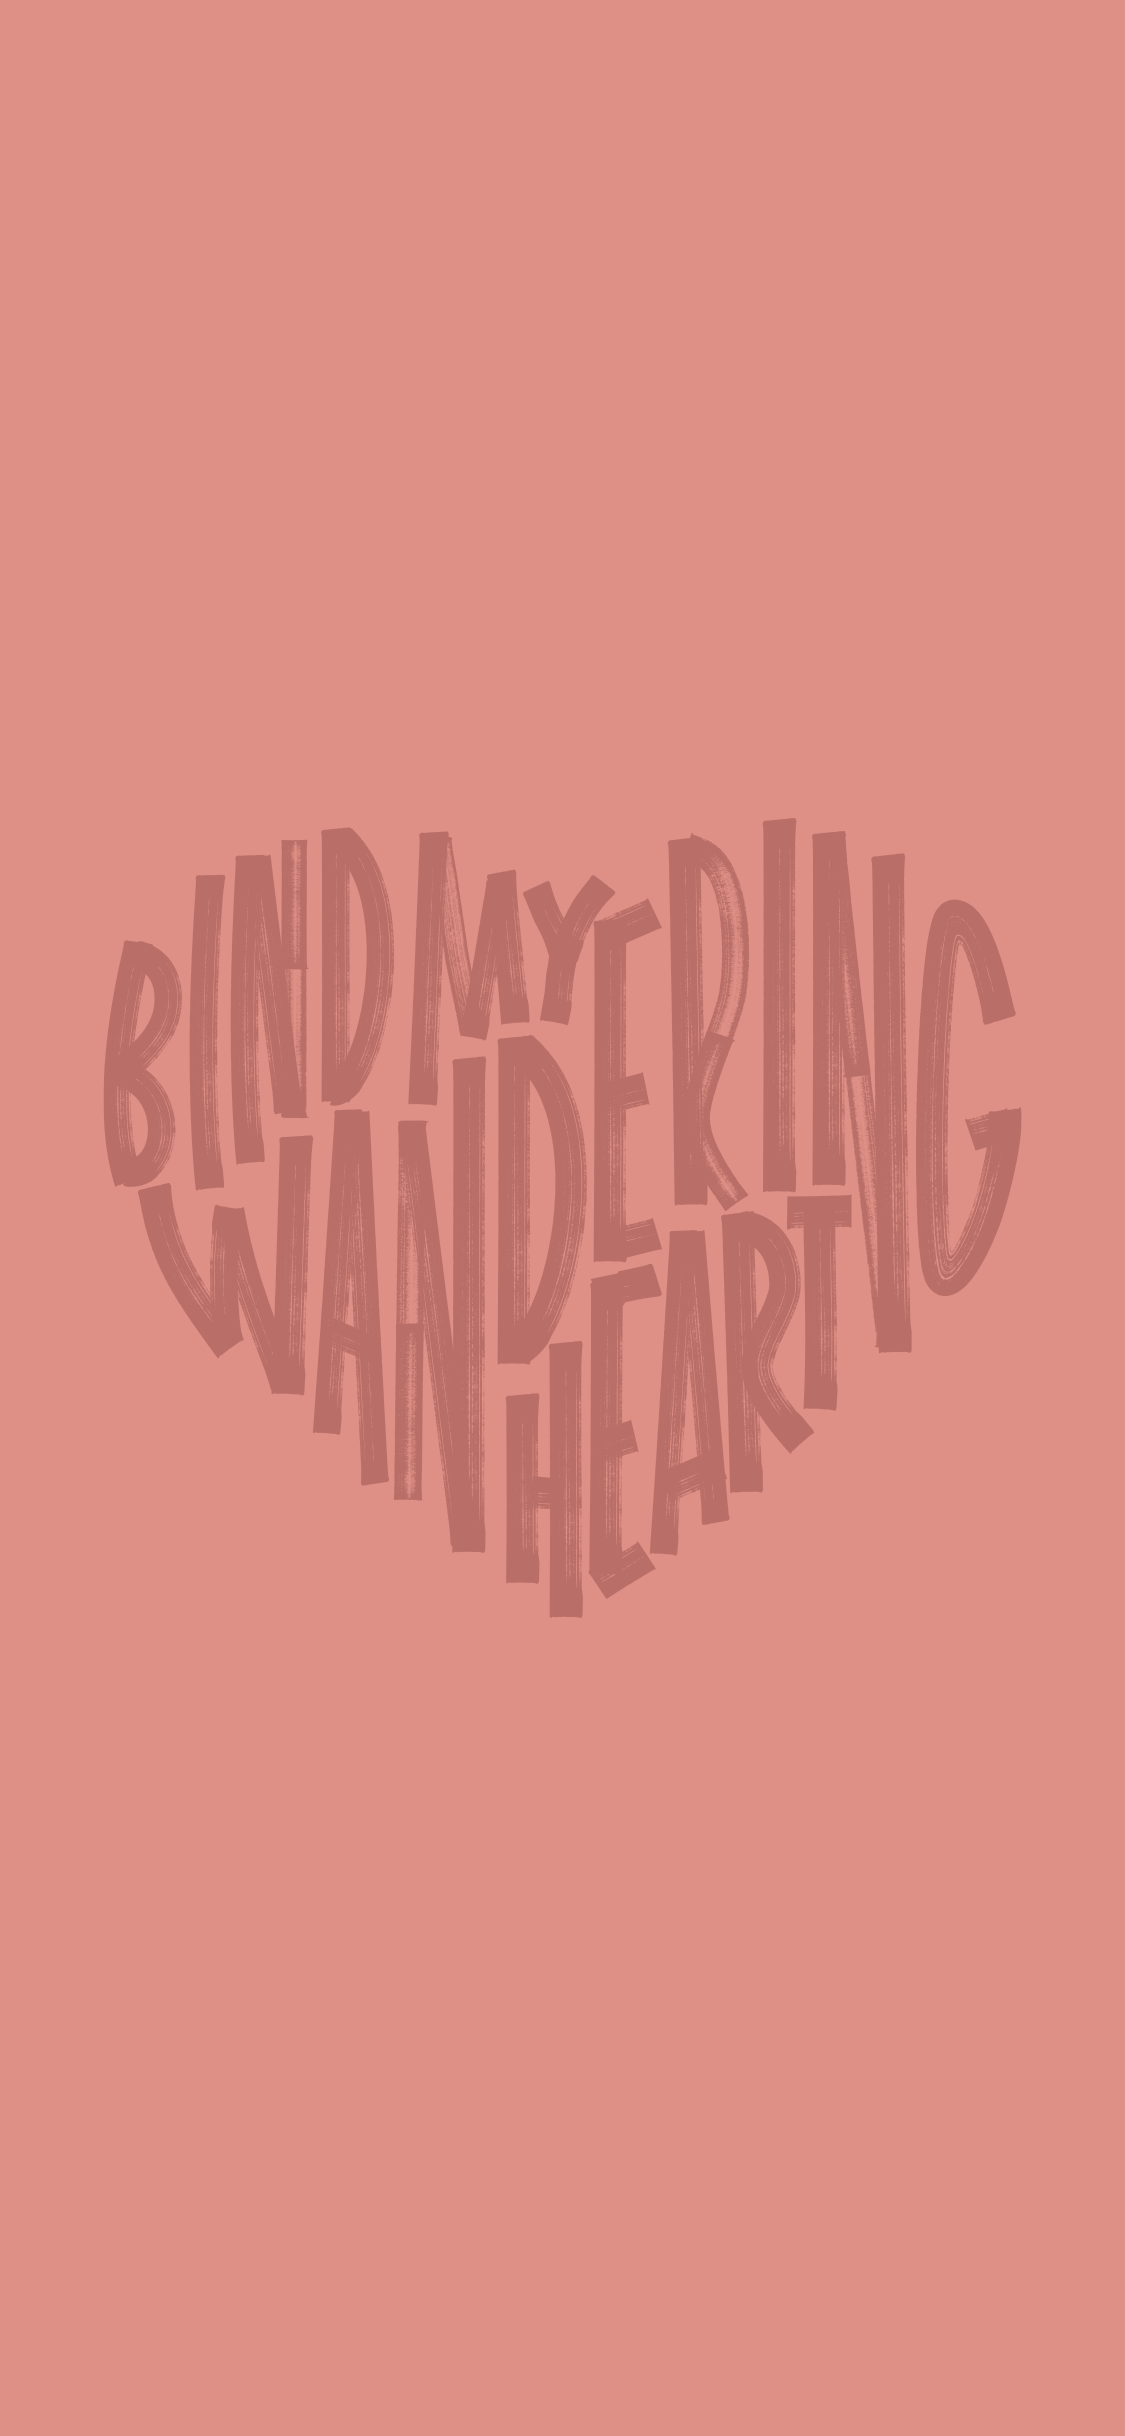 Bind-My-Wandering-Heart-Wallpaper.png